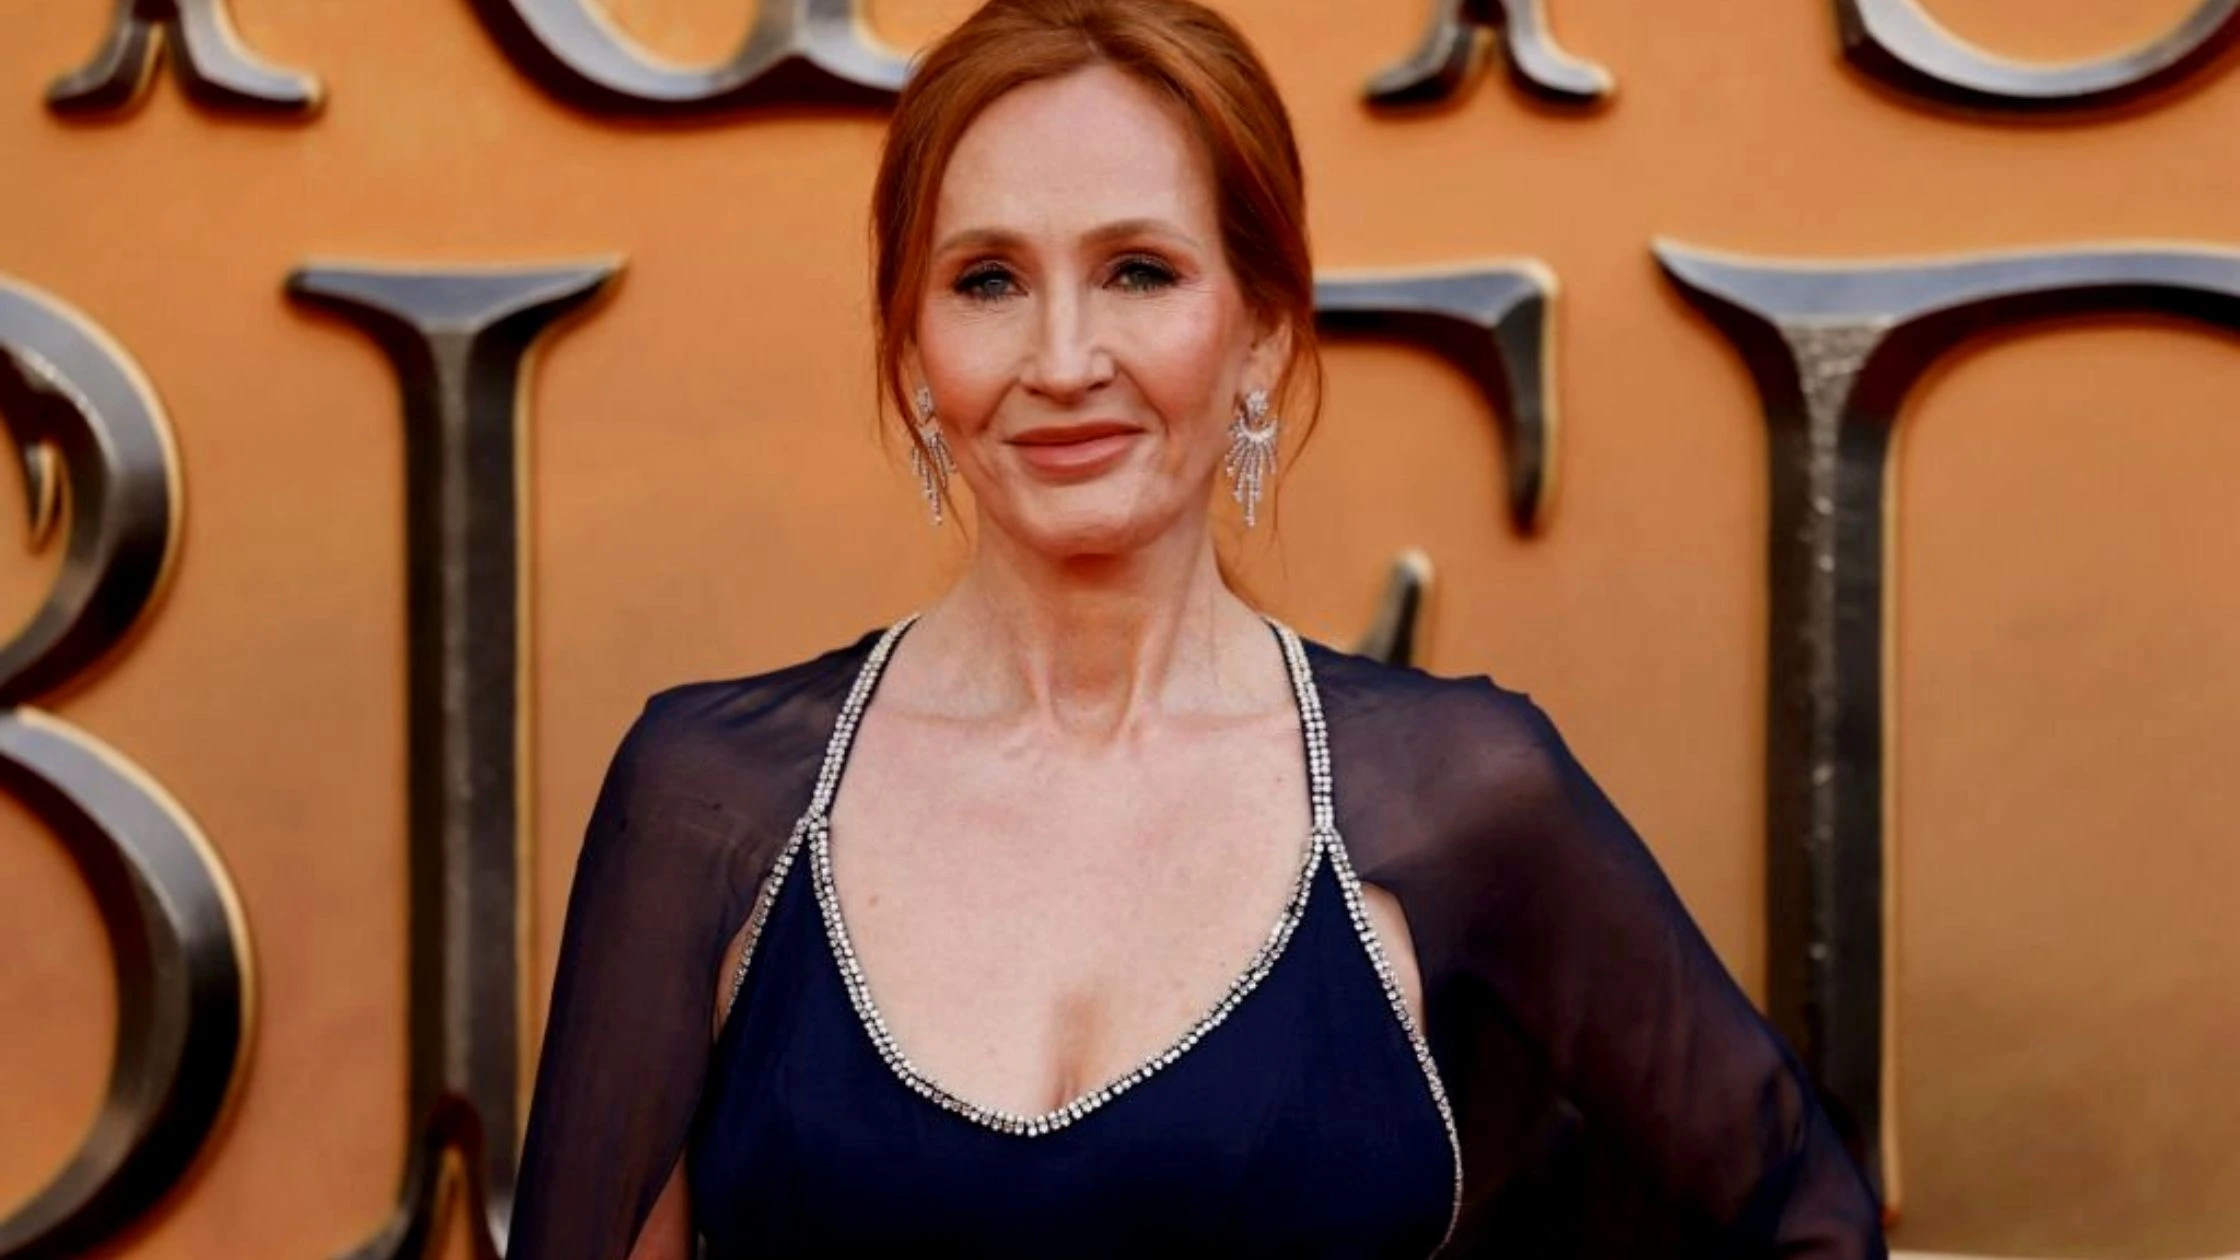 Hogwarts Developers Responded To JK Rowling’s Anti-Transgender Comments